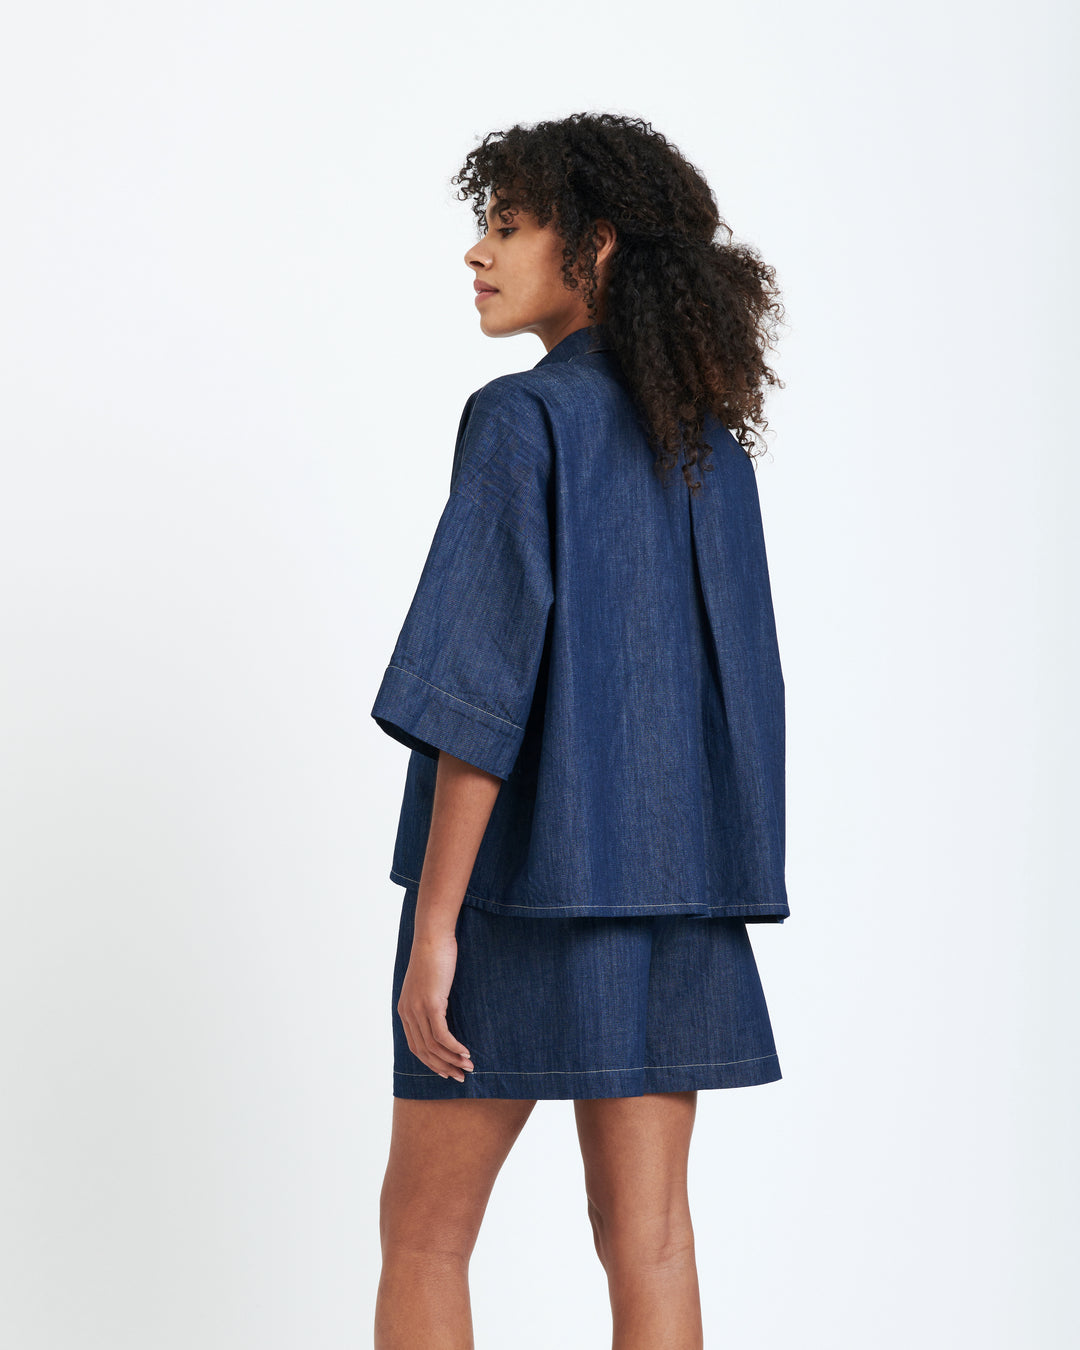 New Optimist womenswear Notte | Mid-sleeve boxy blouse Blouse